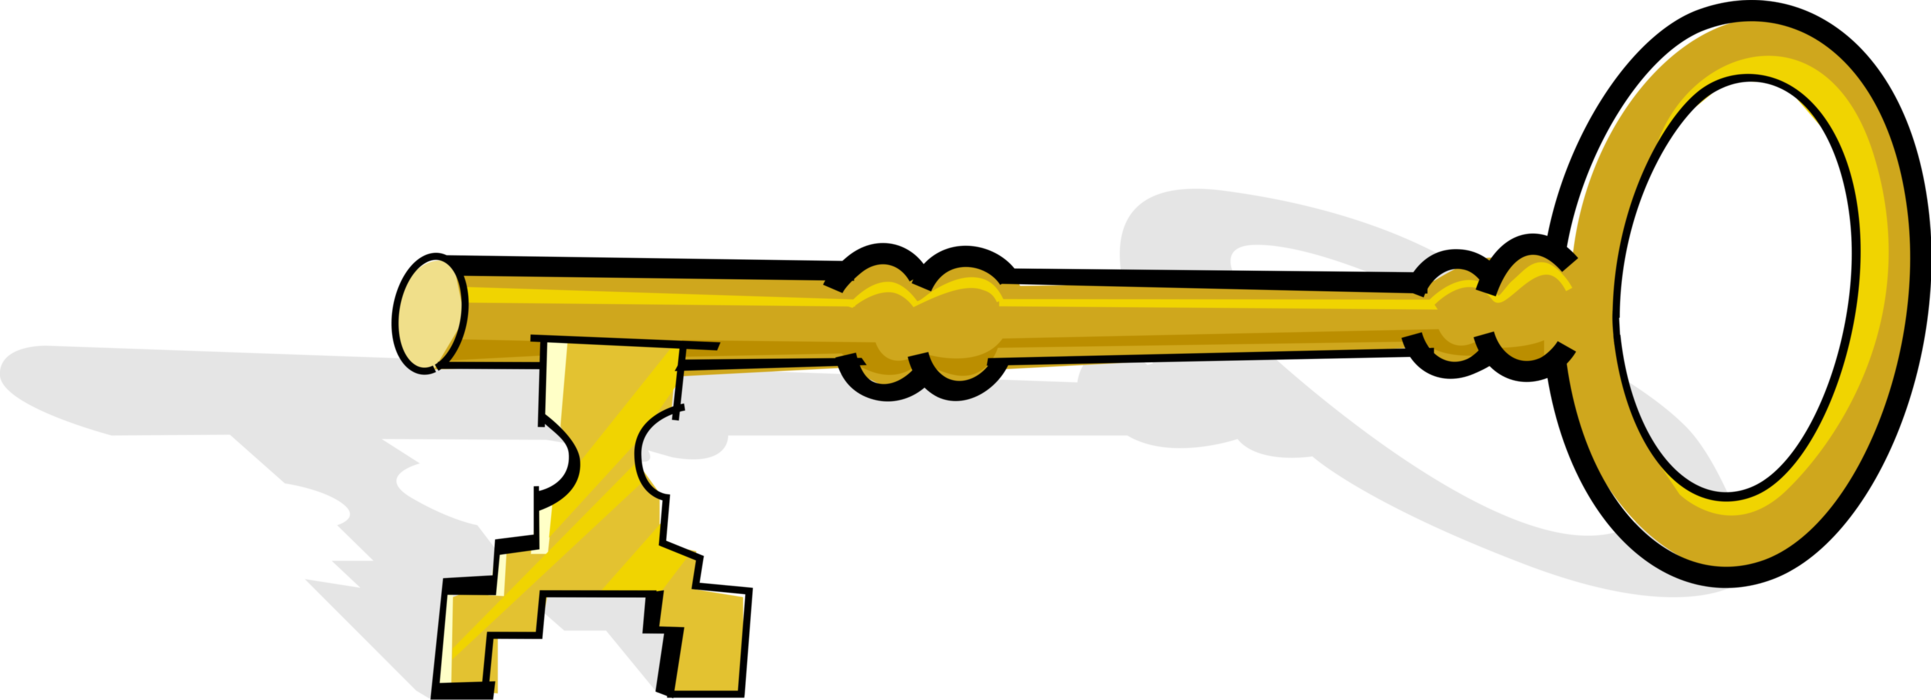 Vector Illustration of Skeleton Security Key Unlocks Padlock Locks